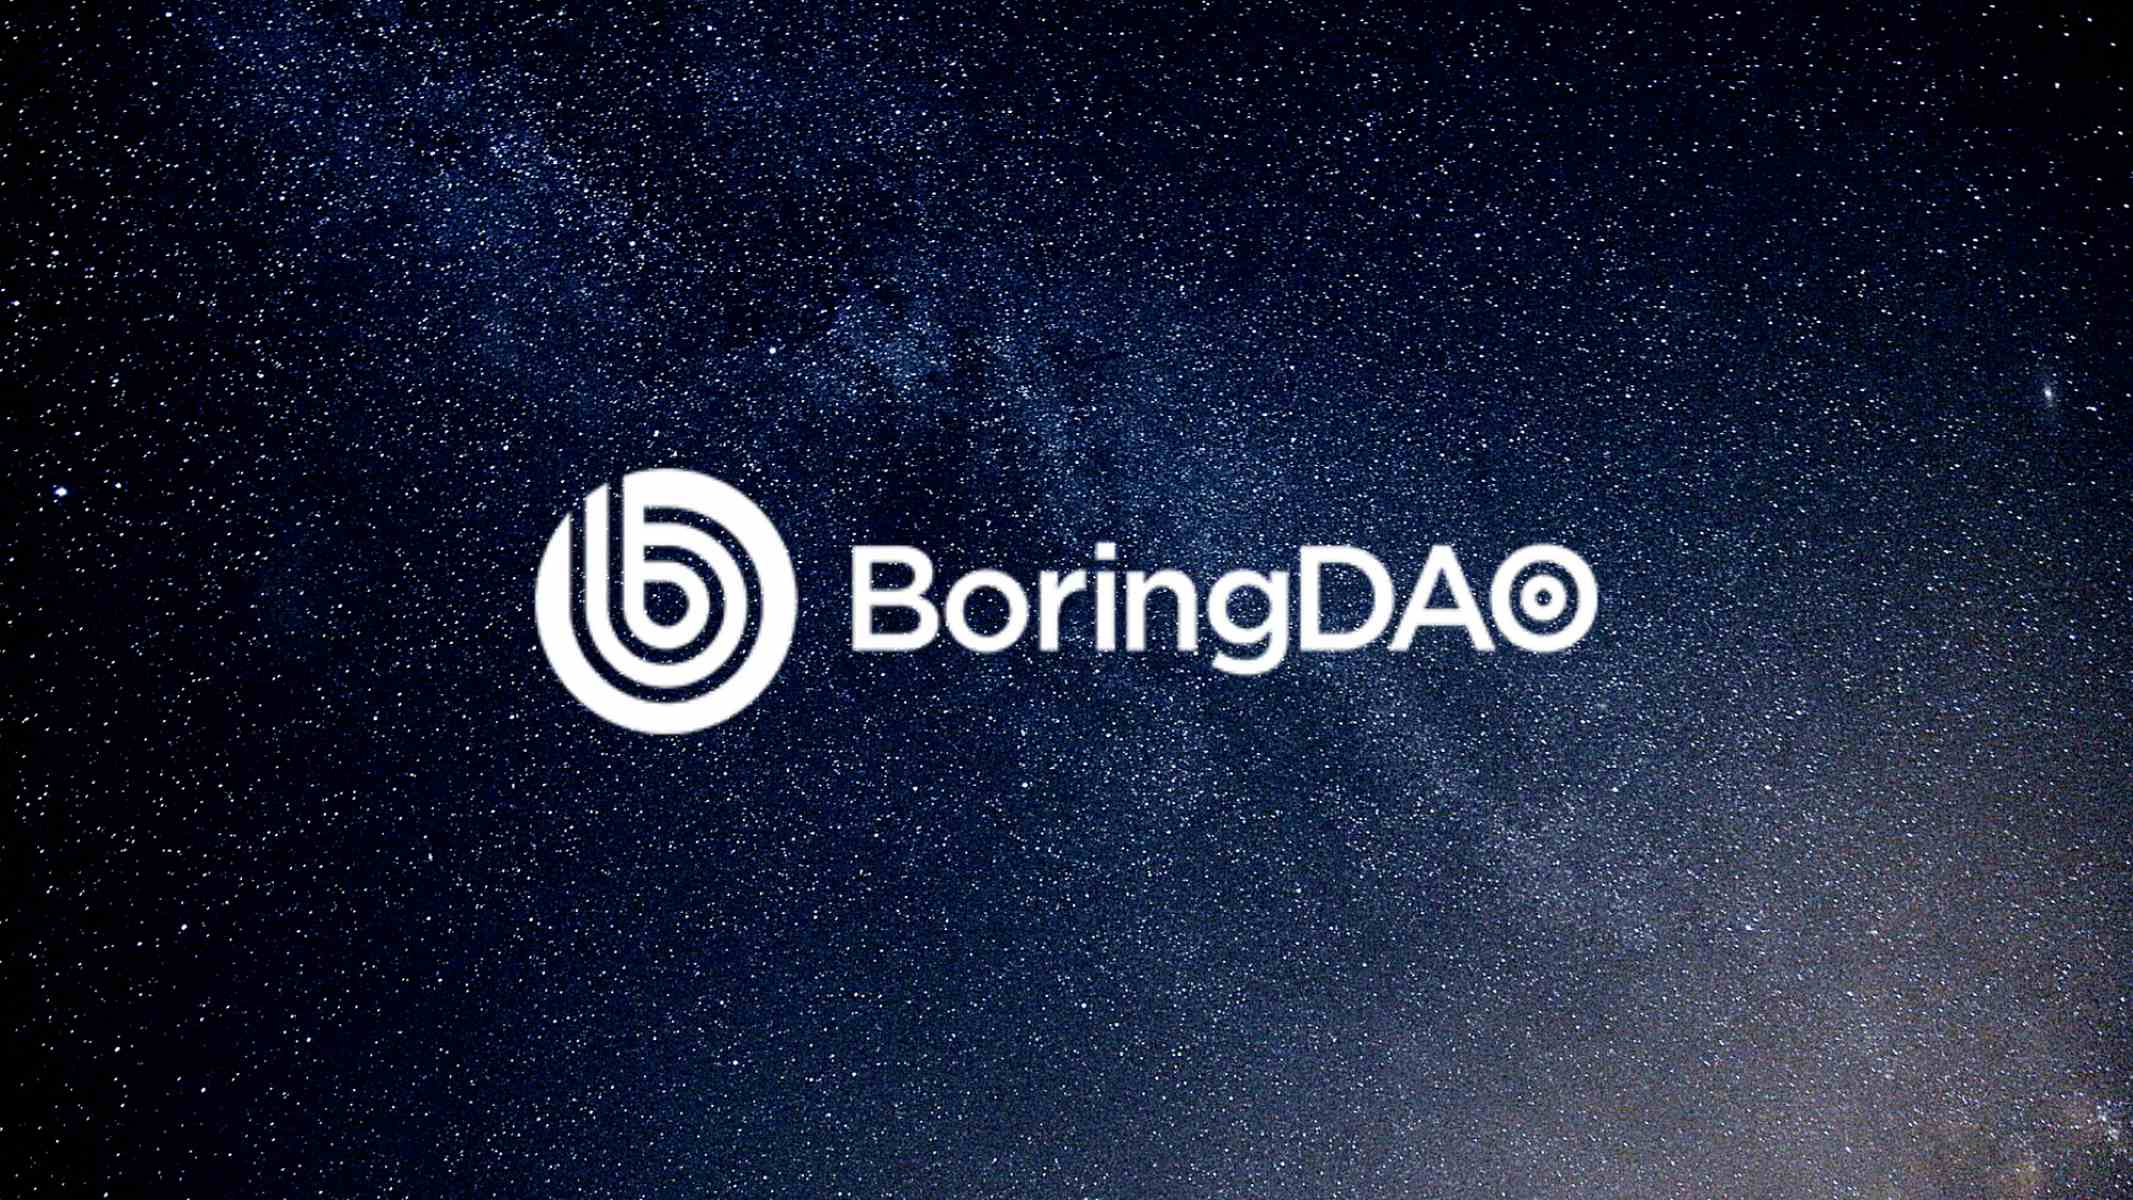 16-extraordinary-facts-about-boringdao-bor